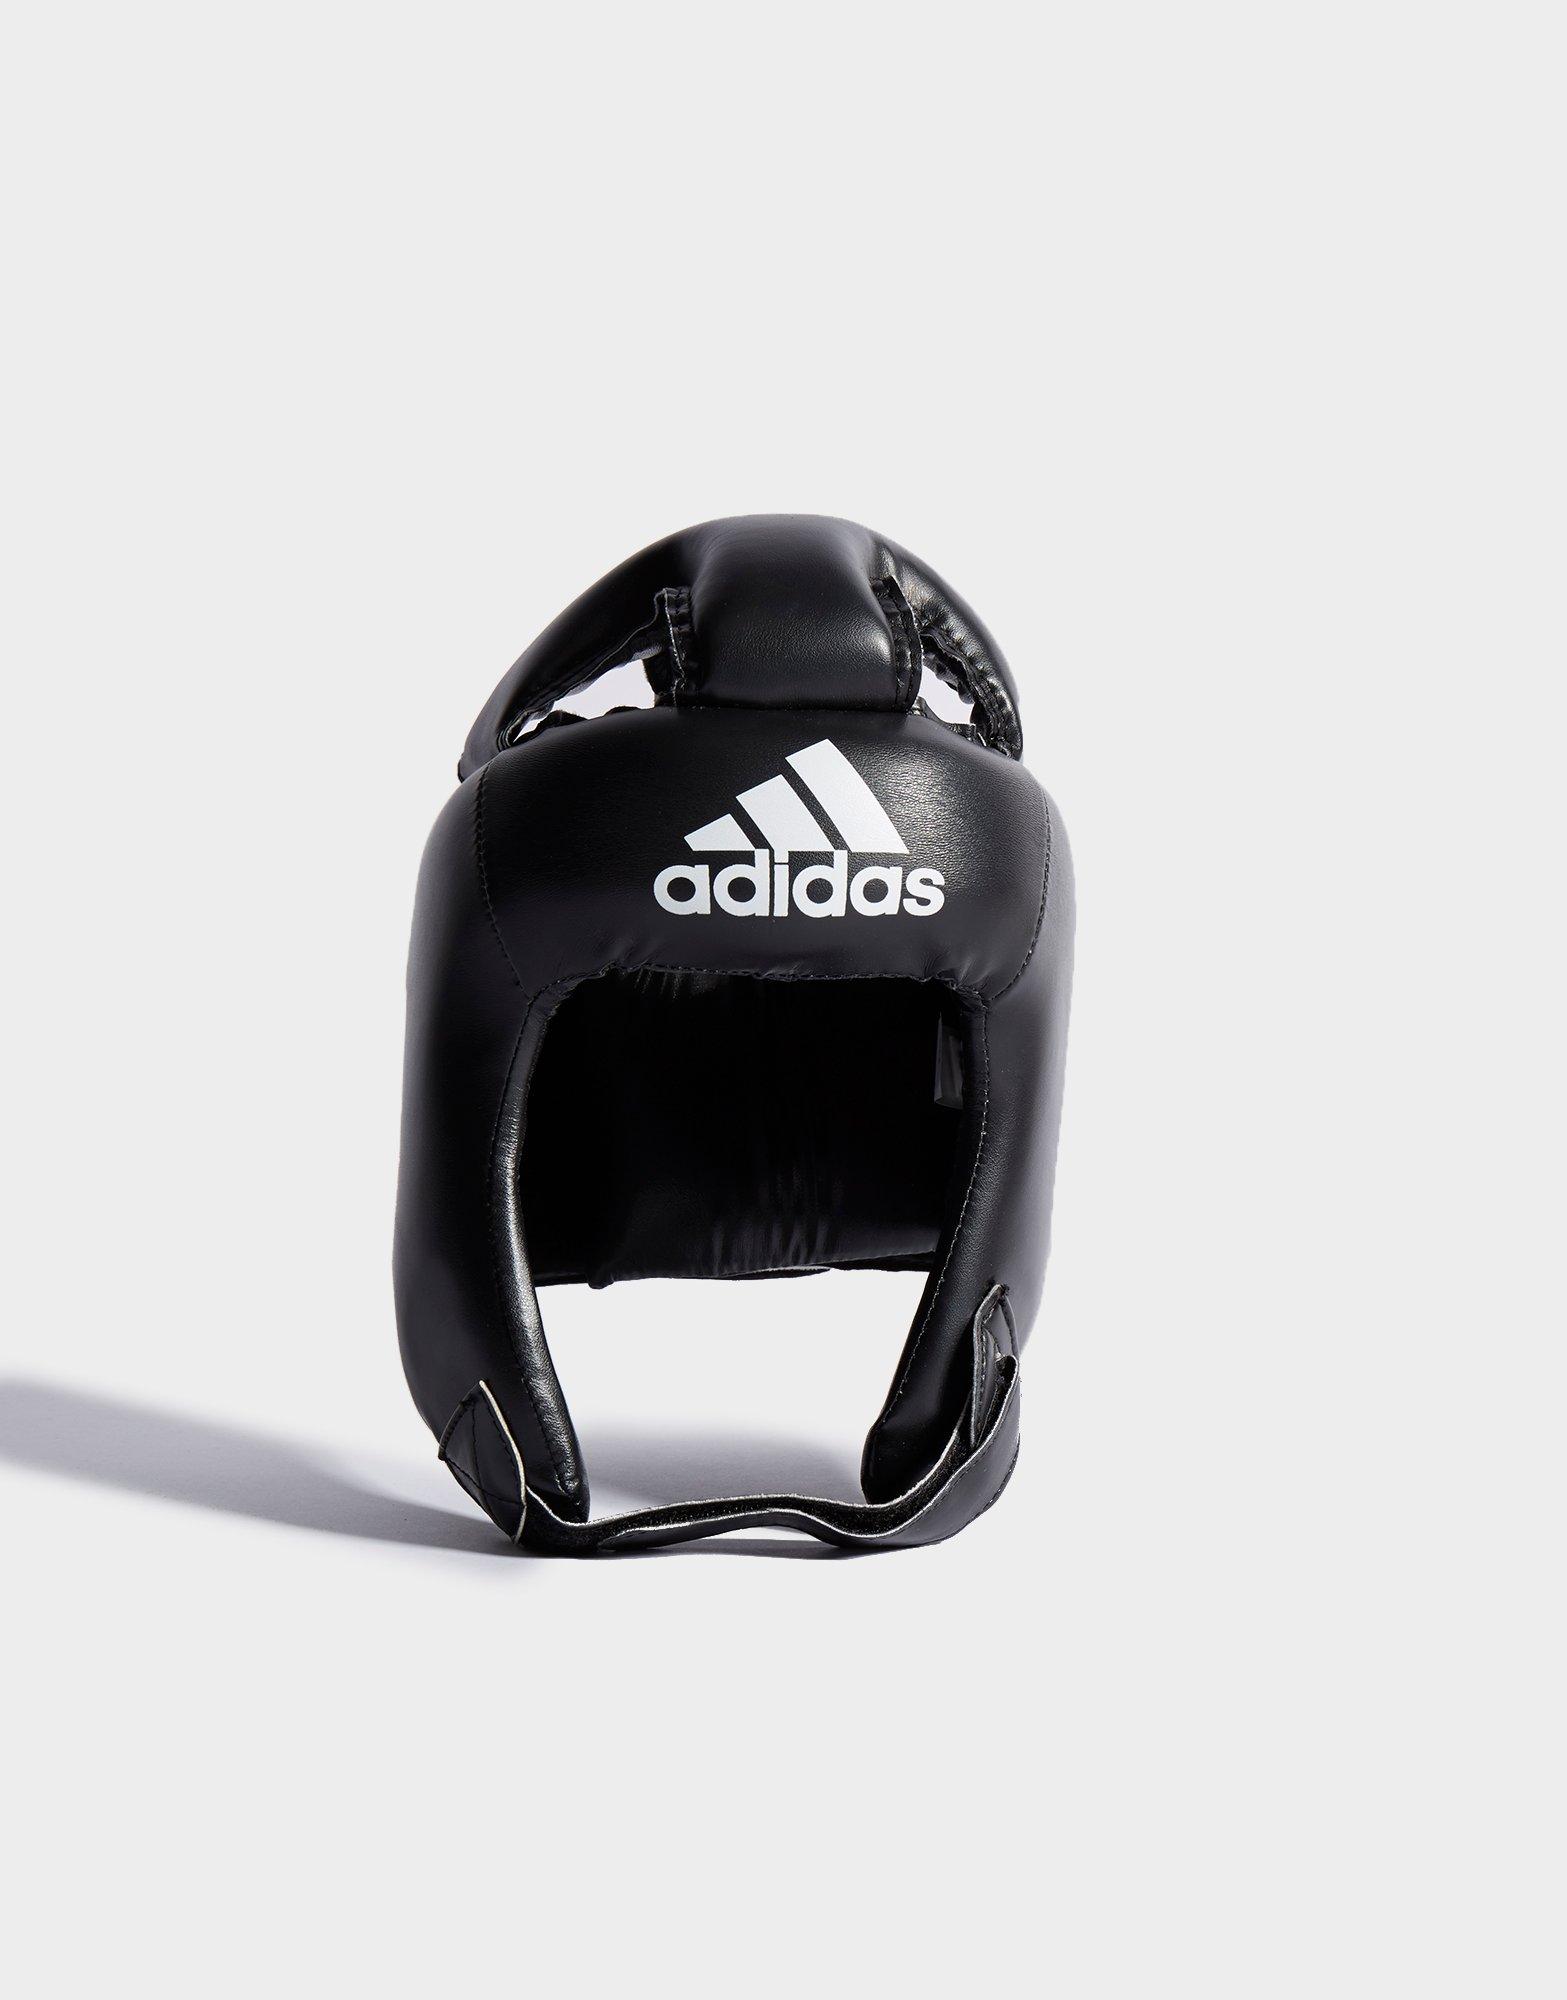 adidas rookie head guard